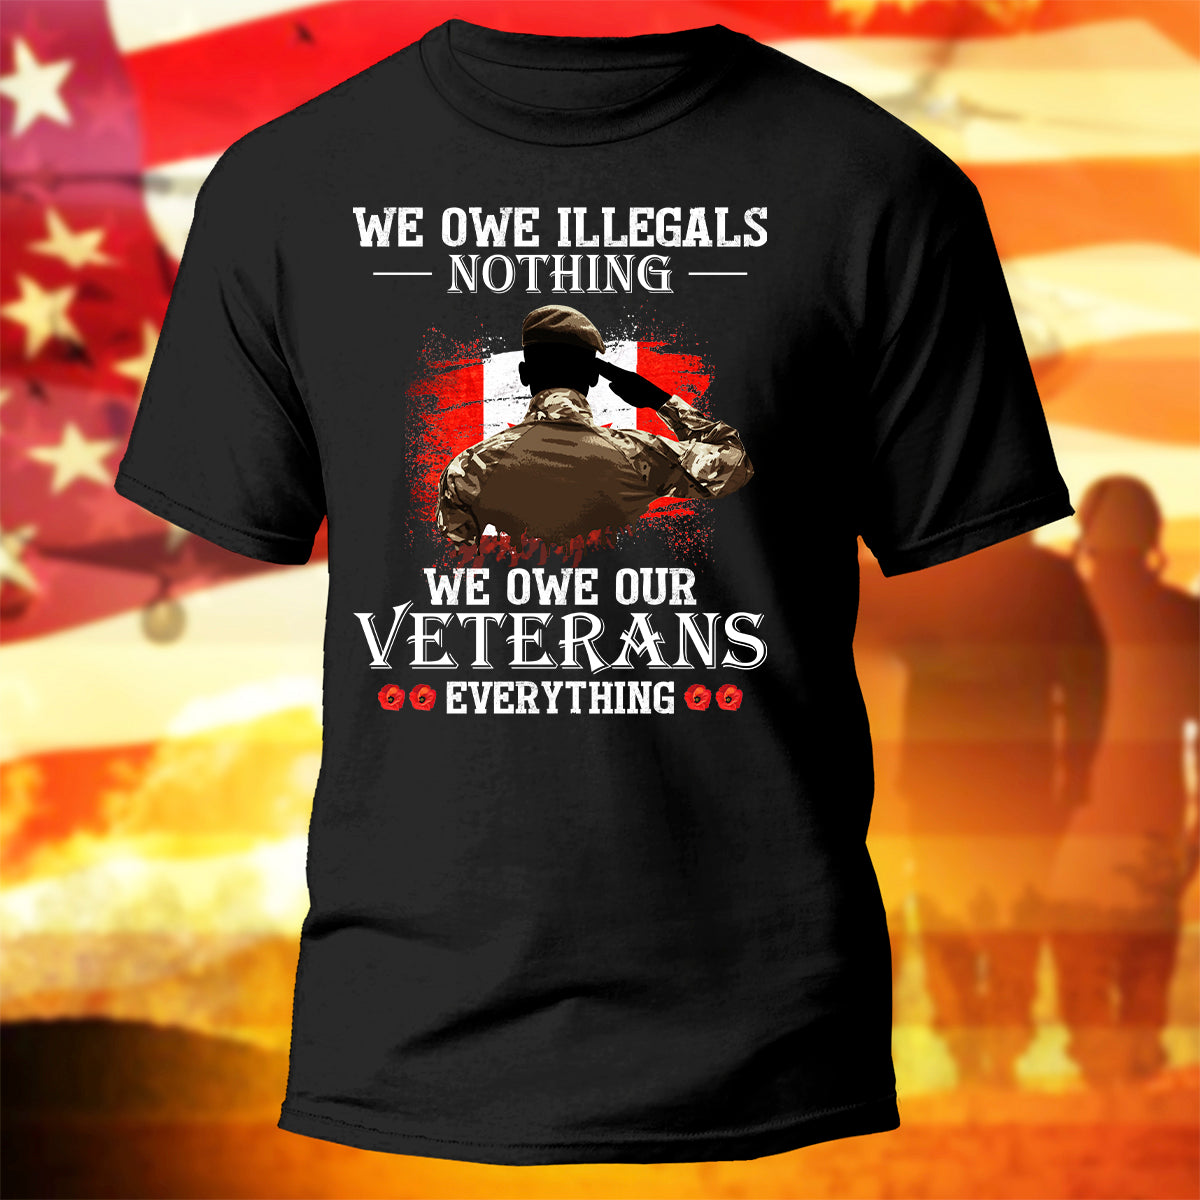 Canadian Veterans T-Shirt We Owe Our Veterans Everything Shirt Veterans Gift